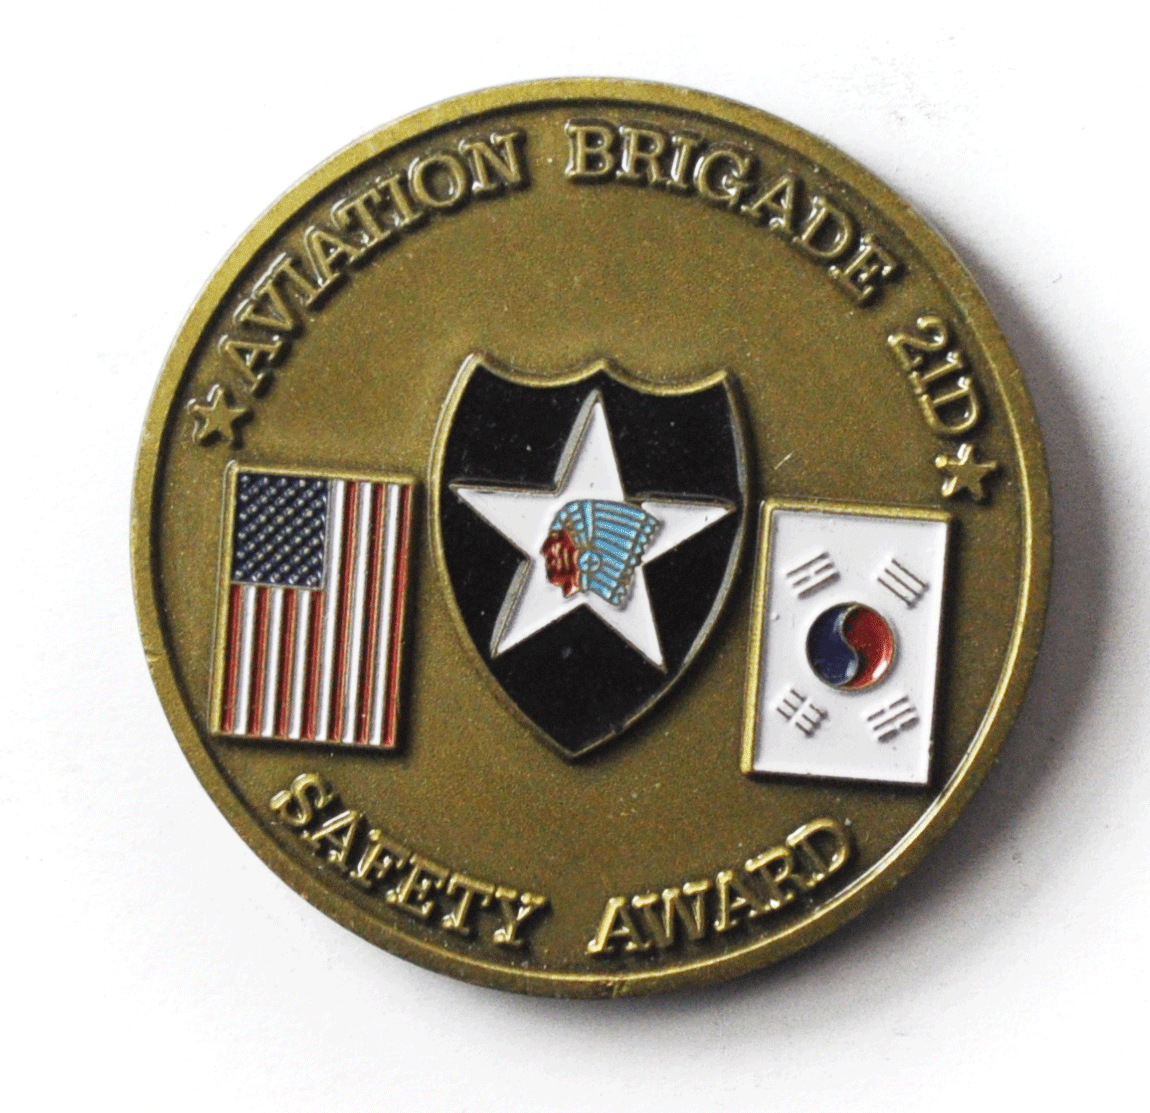 1-2 Attack 2-2 Assault 4-7 Cavalry Aviation Brigade 21D Safety Award 1-3/4"